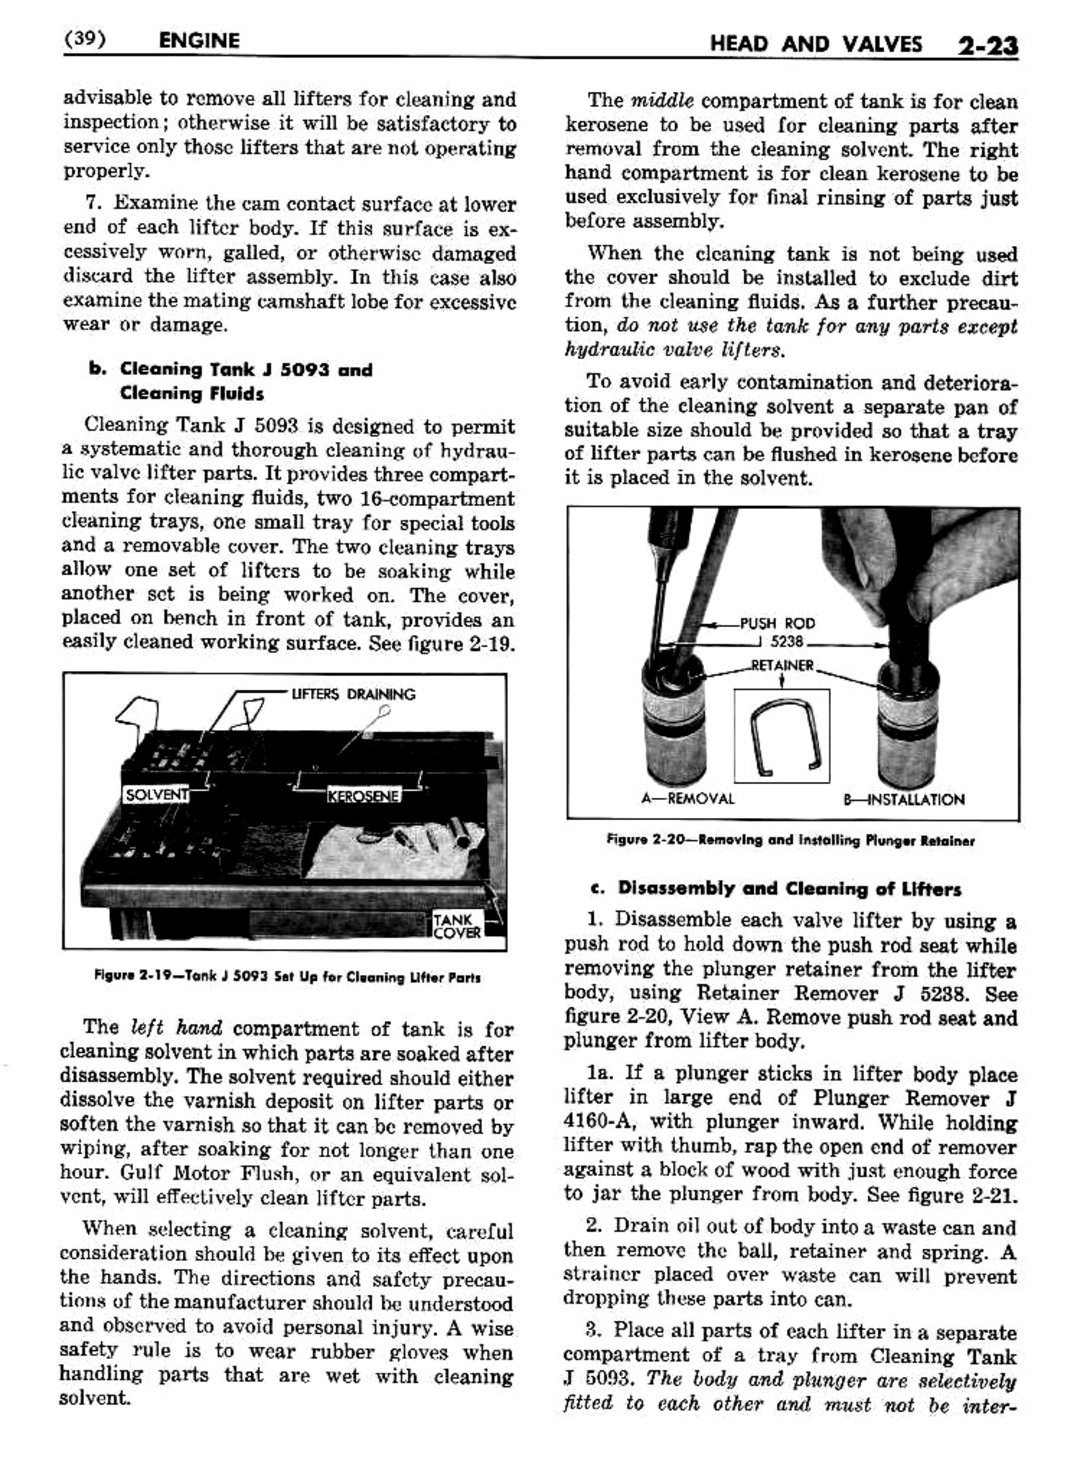 n_03 1956 Buick Shop Manual - Engine-023-023.jpg